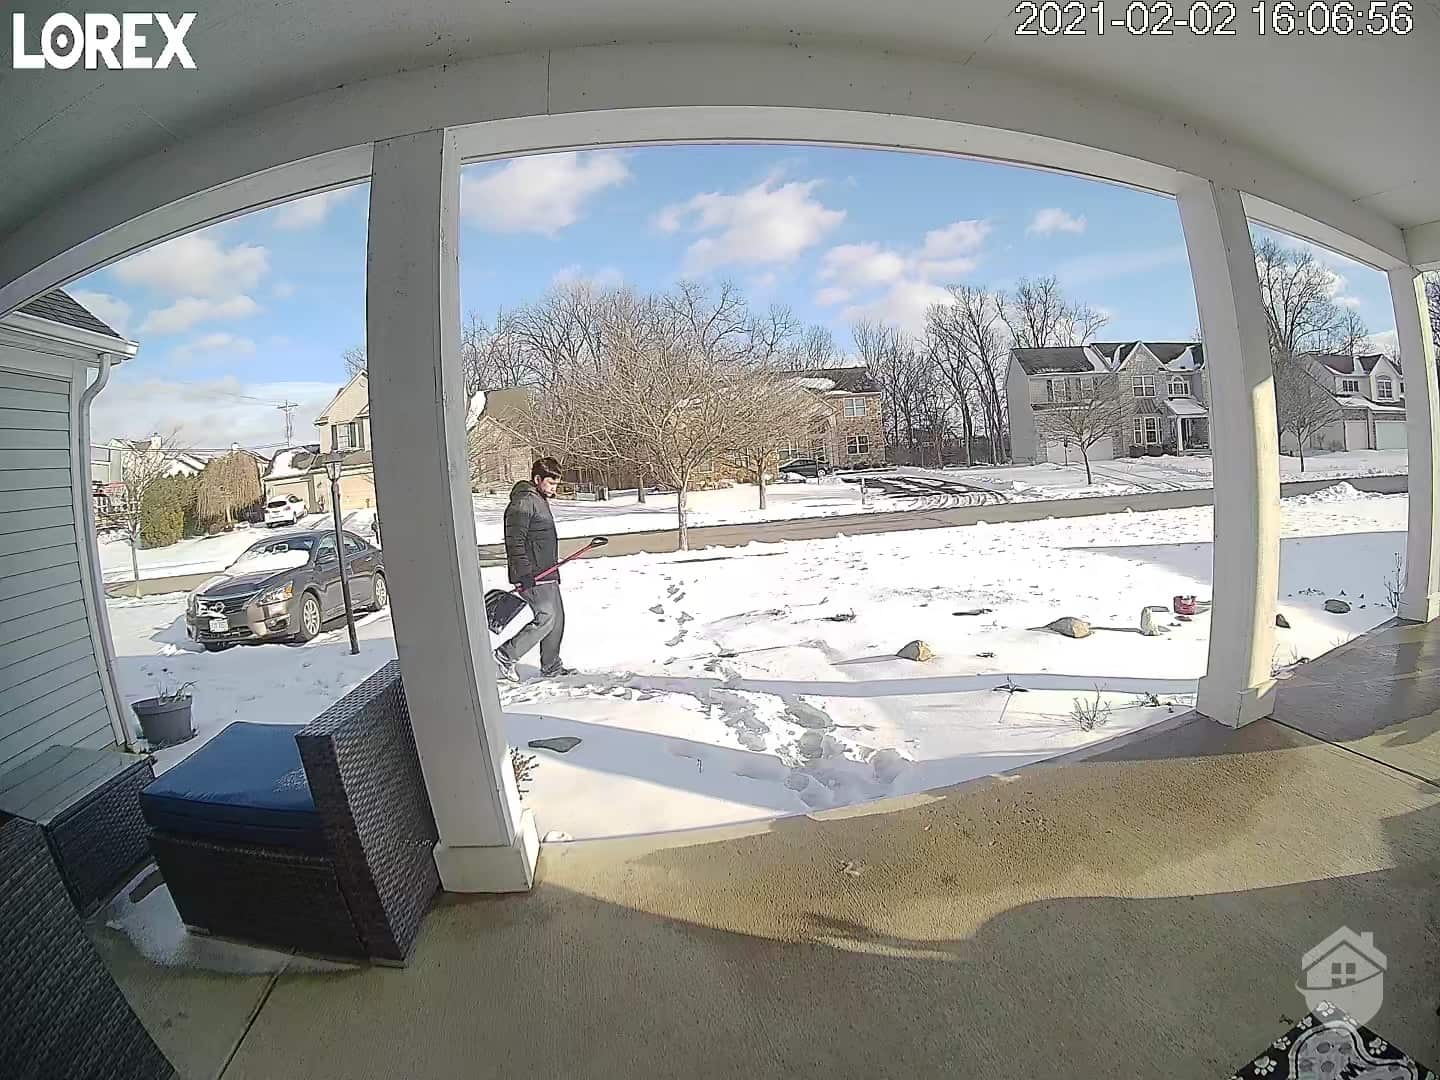 Lorex Doorbell Camera Video Quality